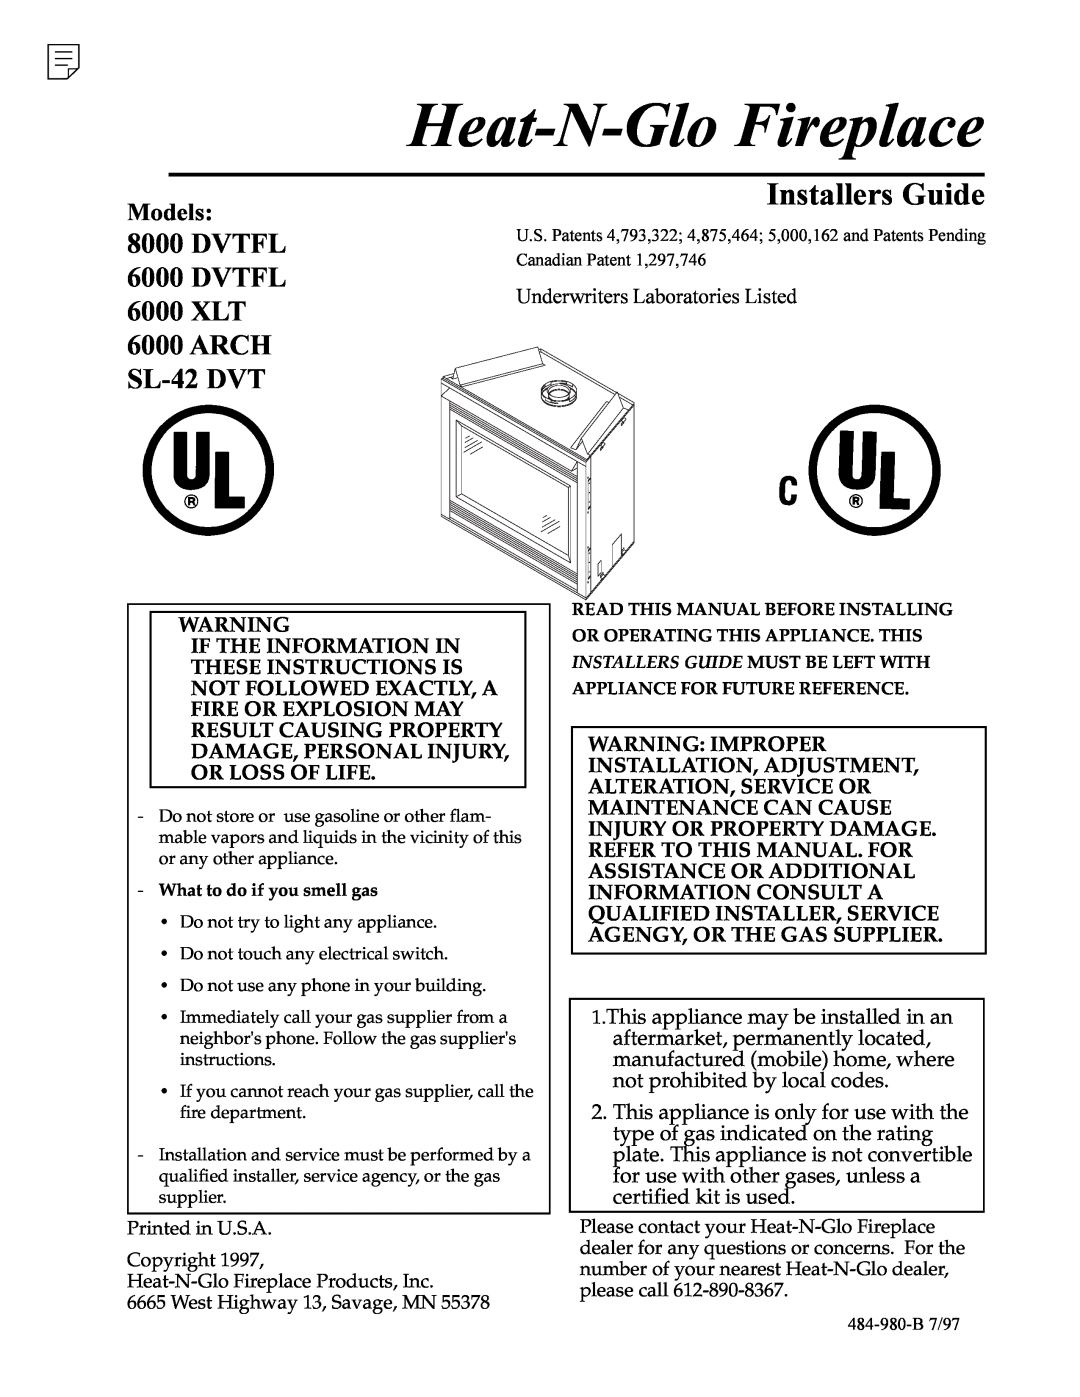 Heat & Glo LifeStyle SL-42 DVT manual Underwriters Laboratories Listed, Heat-N-GloFireplace, Installers Guide, Dvtfl, Arch 